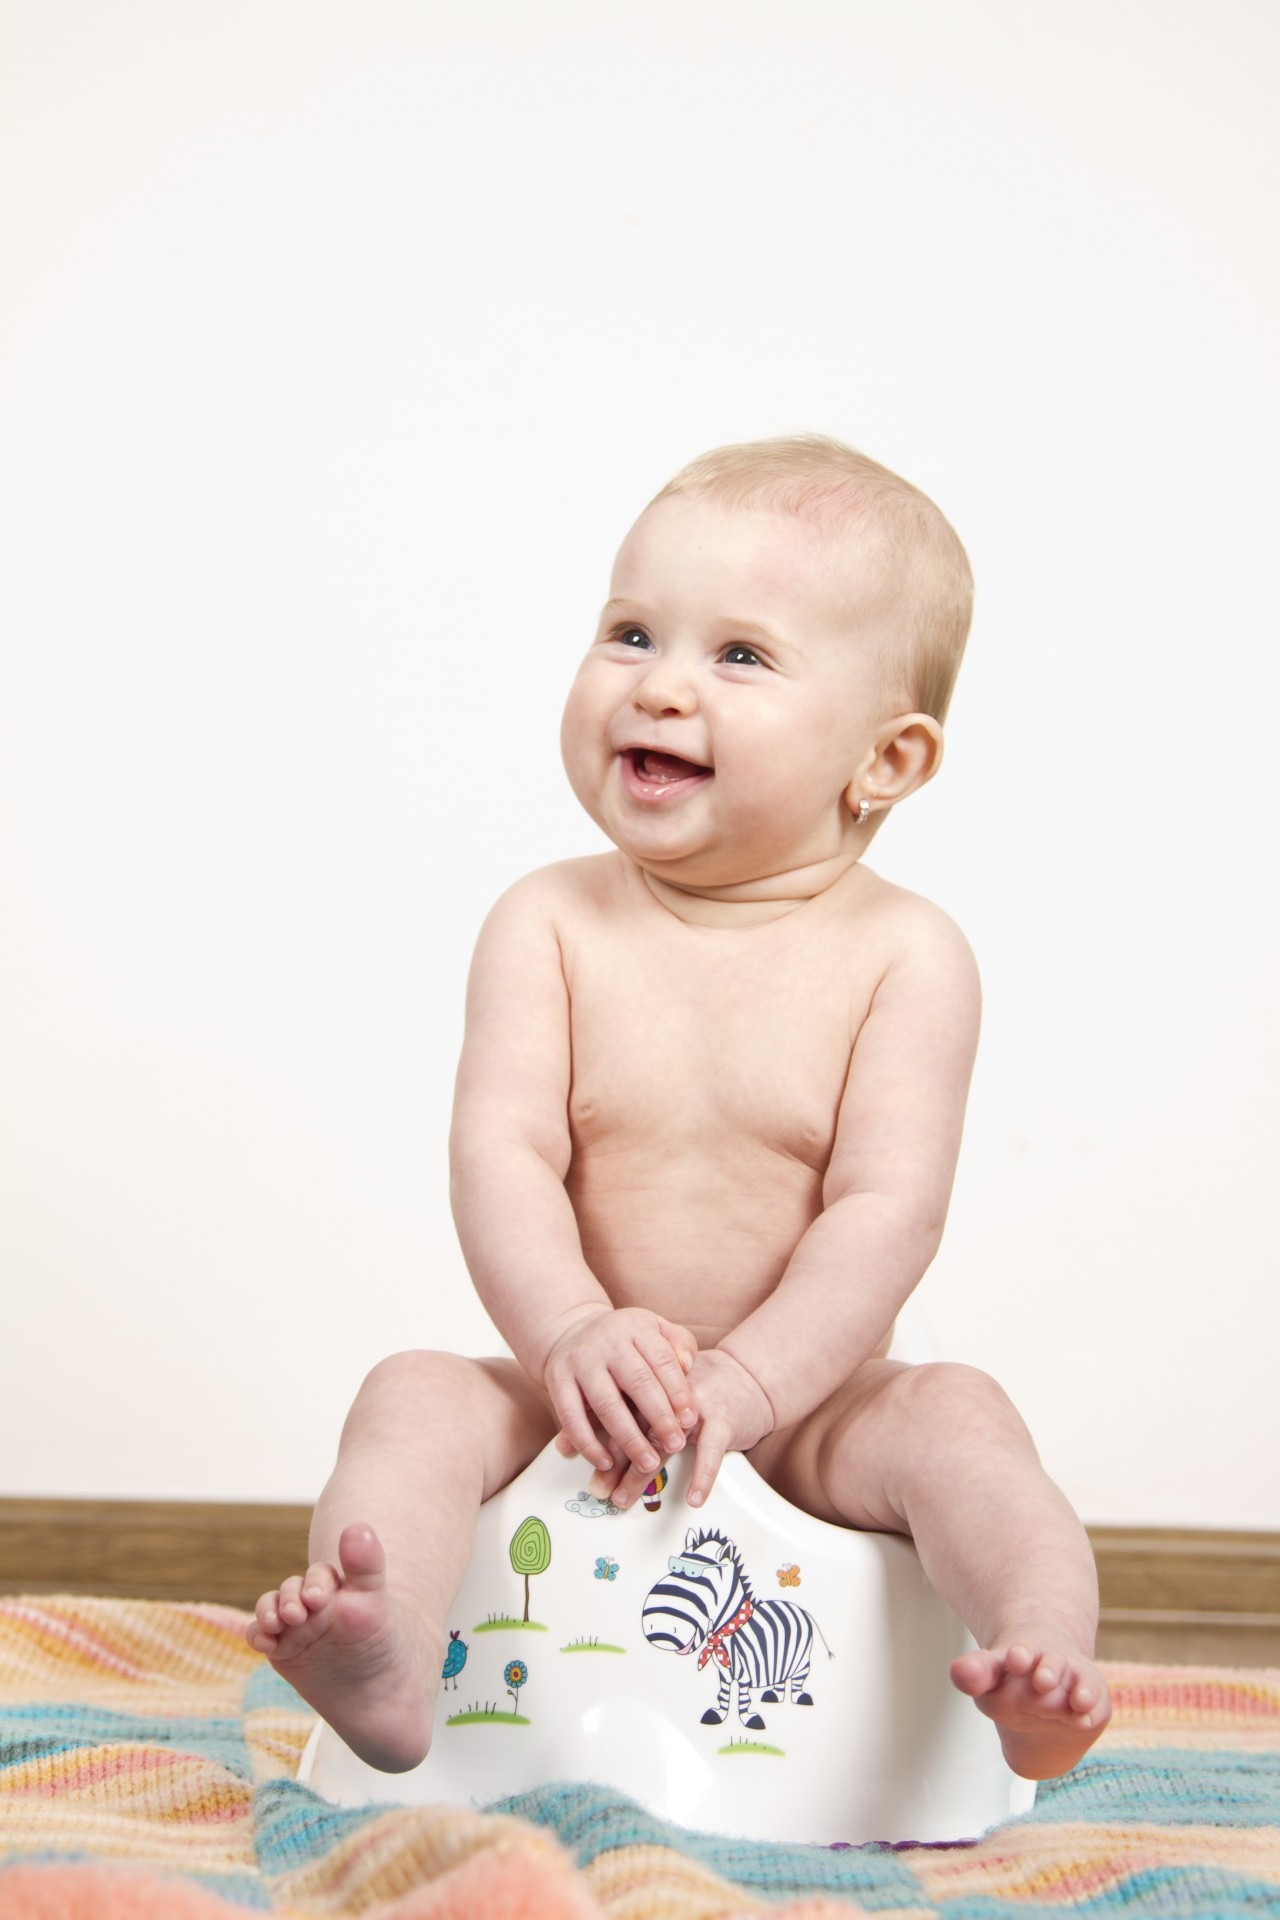 how to potty train a toddler, potty training, potty triaining methods, potty training tips, child, sitting, potty, potty training